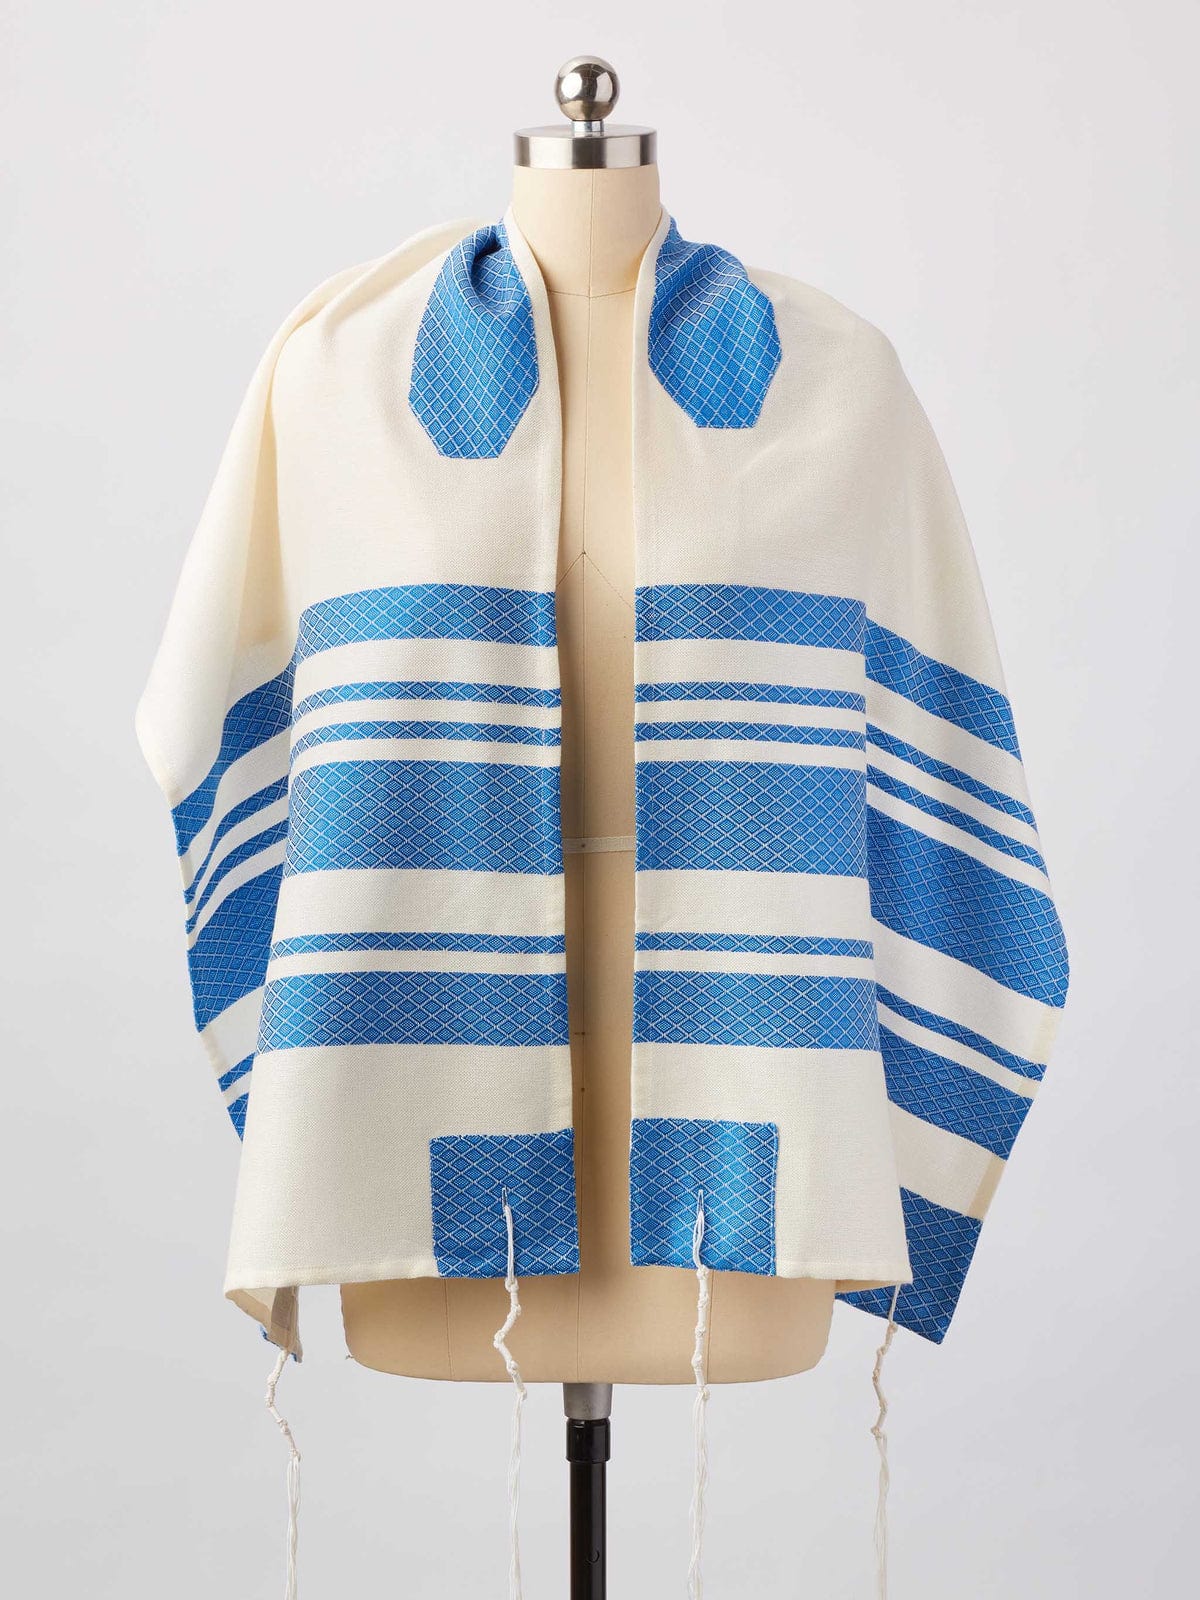 Advah Tallises Blue Stripes Traditional Woven Tallit by Advah Designs